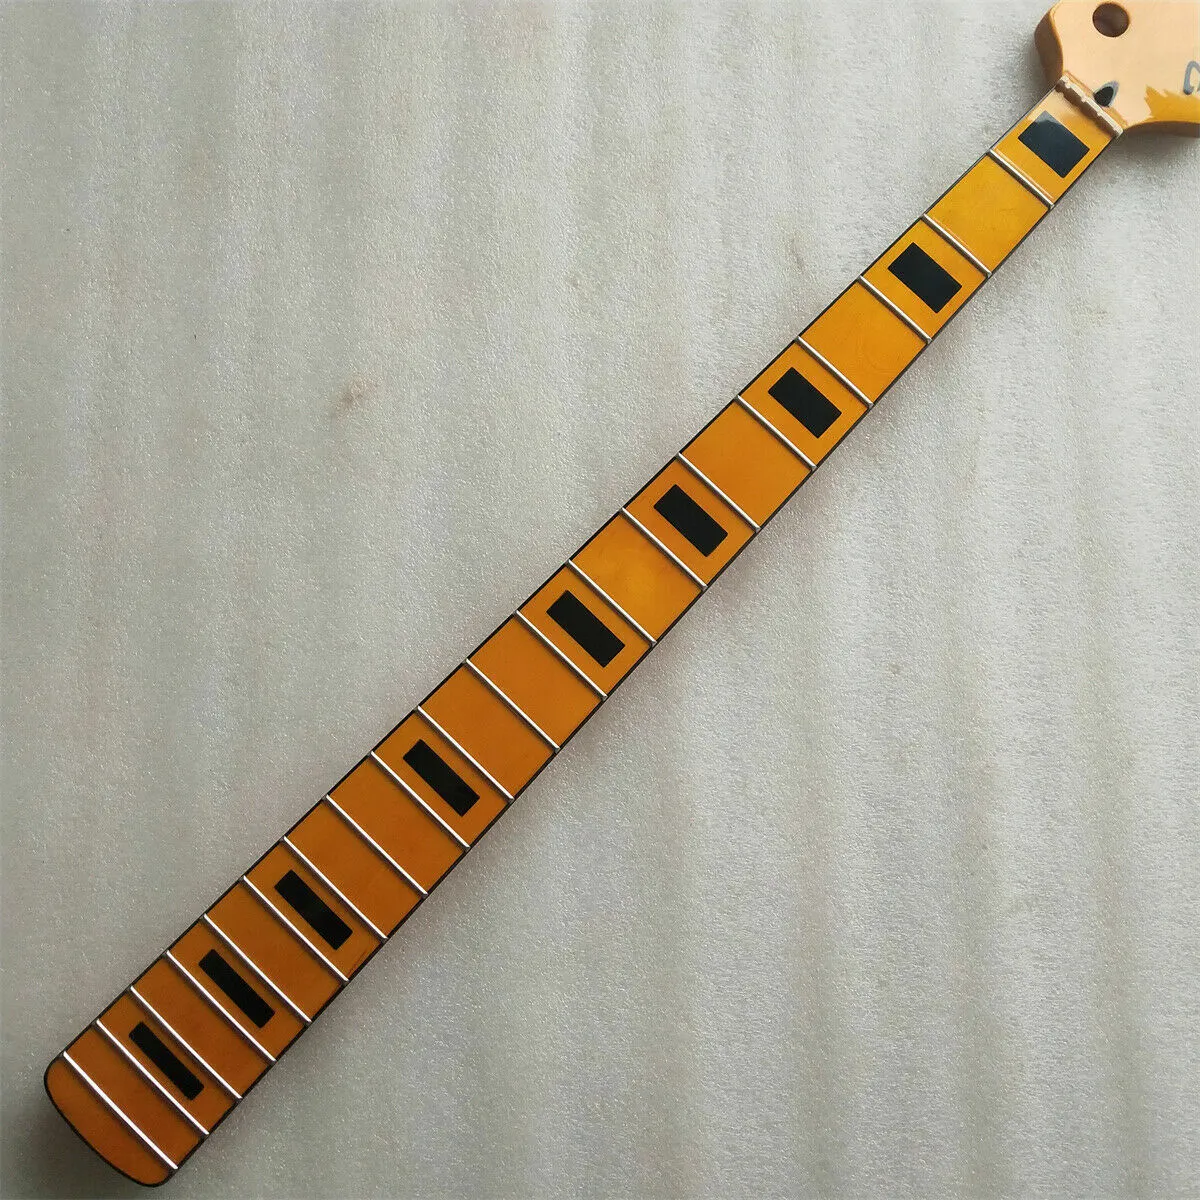 34 polegadas de bassi -bassi -guitarra de 34 polegadas Maple 4 barbante 20 Faixa de bordo do bordo Bloco de bloco embutido Gloss amarelo